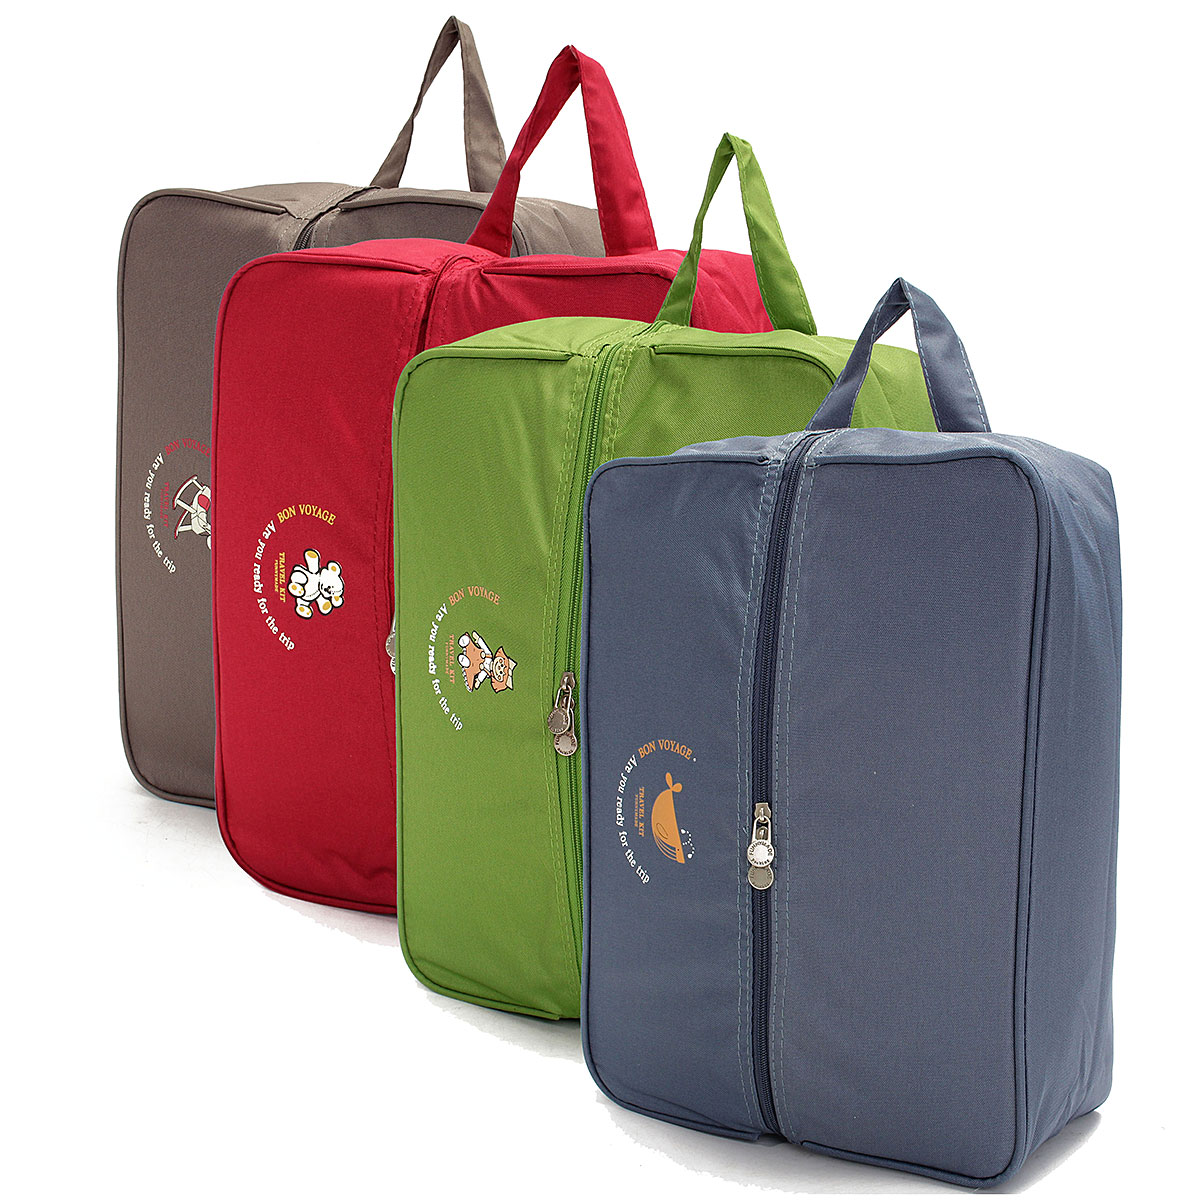 Portable-Nylon-Travel-Storage-Bag-Pouch-Bag-Case-Luggage-Cosmetic-Organizer-1460329-2